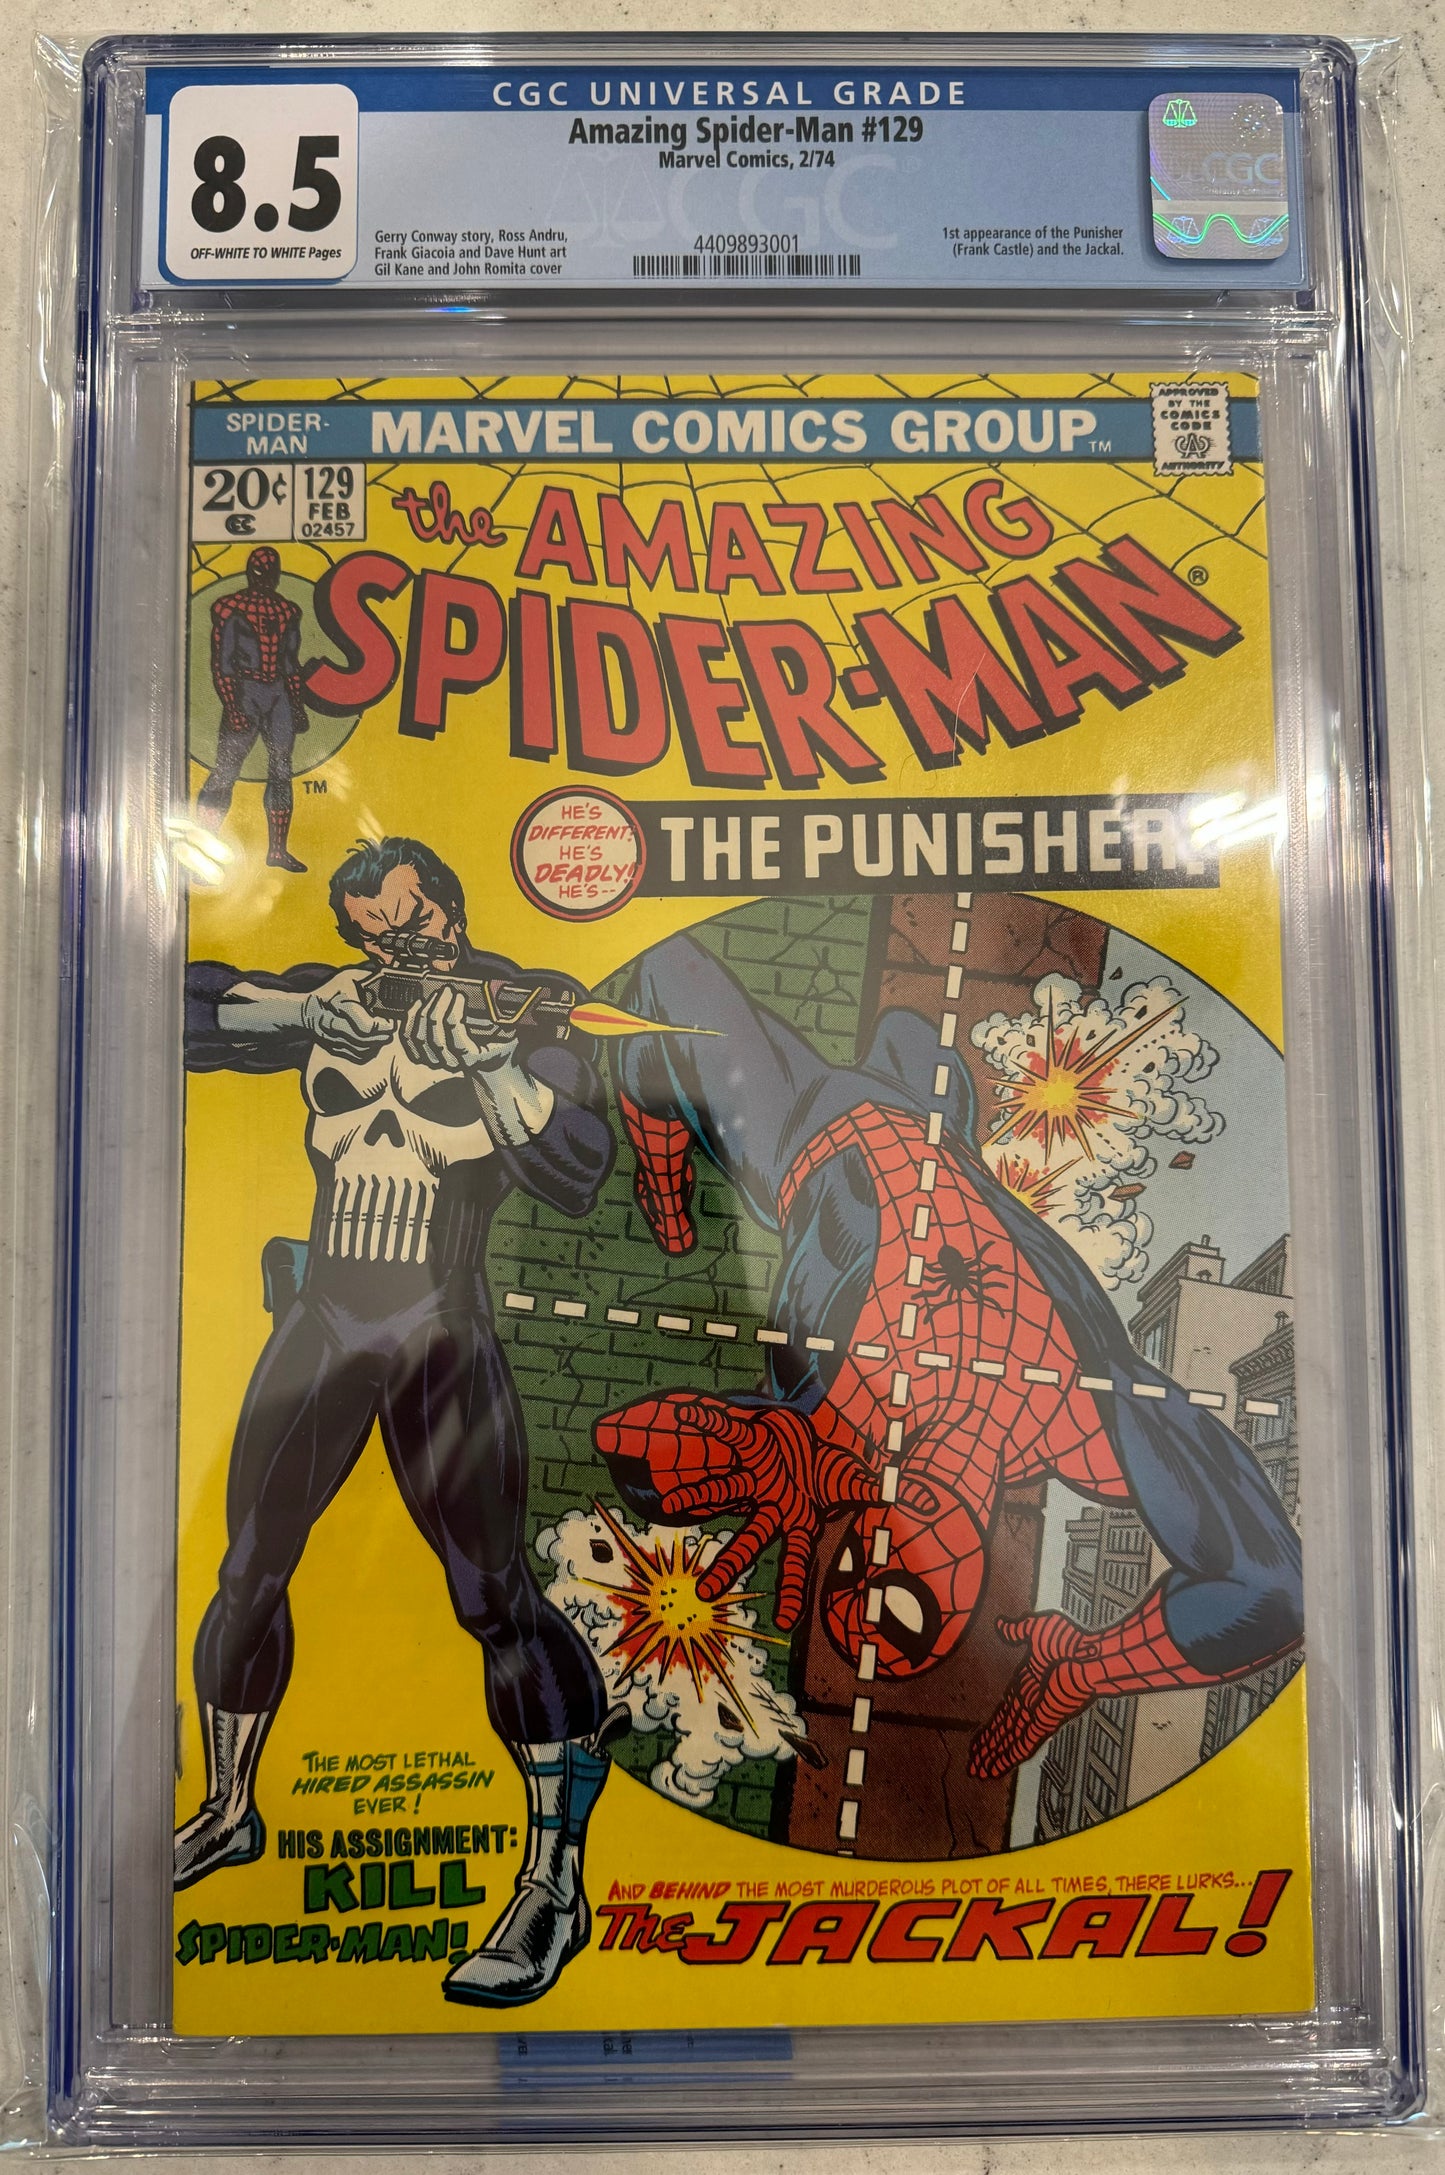 Amazing Spider-Man #129 CGC 8.5 (1st app of The Punisher)